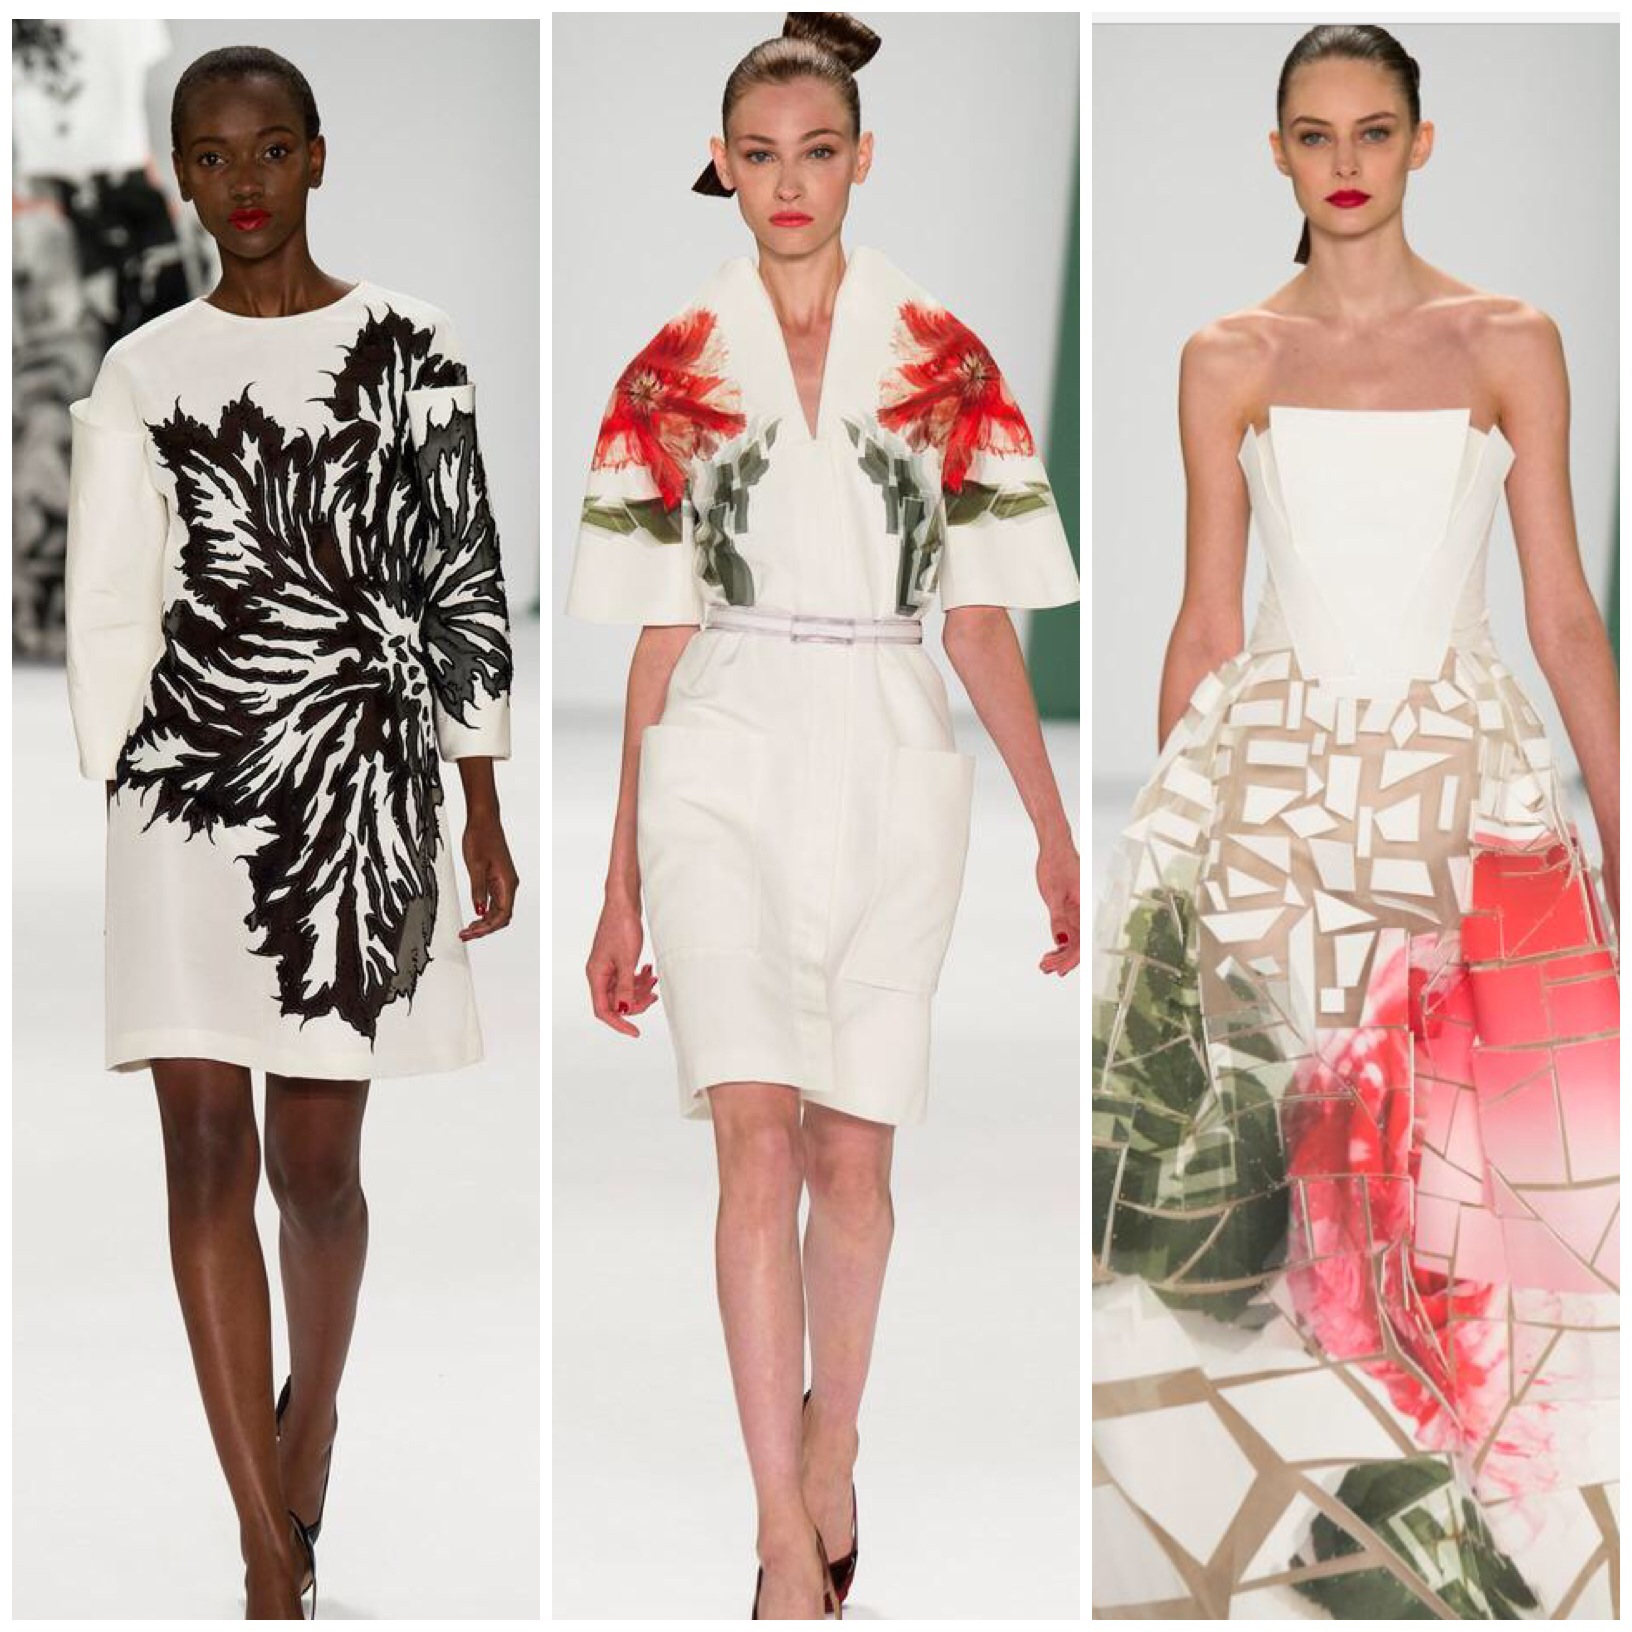 New York Fashion Week Spring 2015 highlights. – Donny Galella